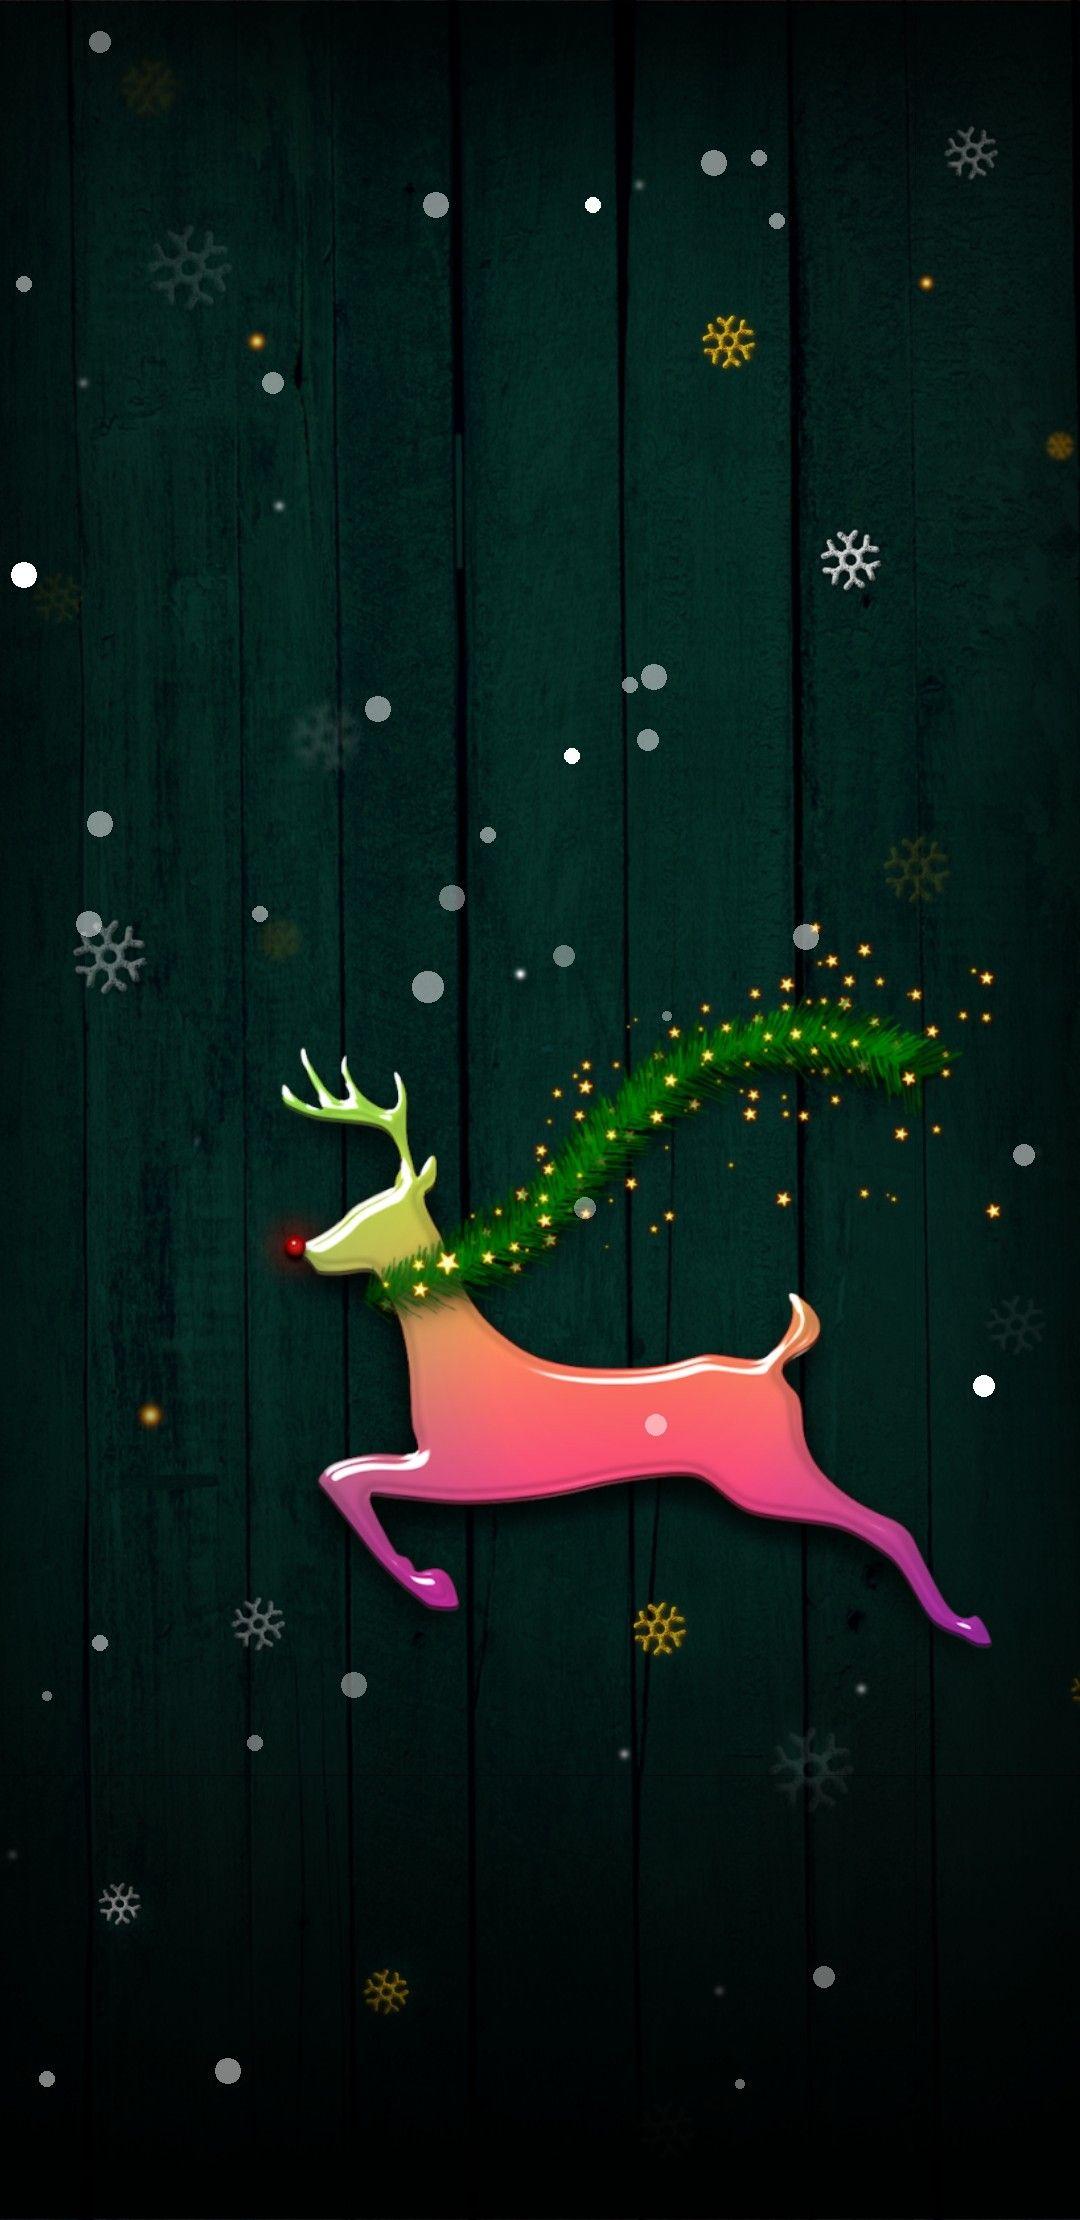 Rudolph Christmas wallpaper. Cute christmas wallpaper